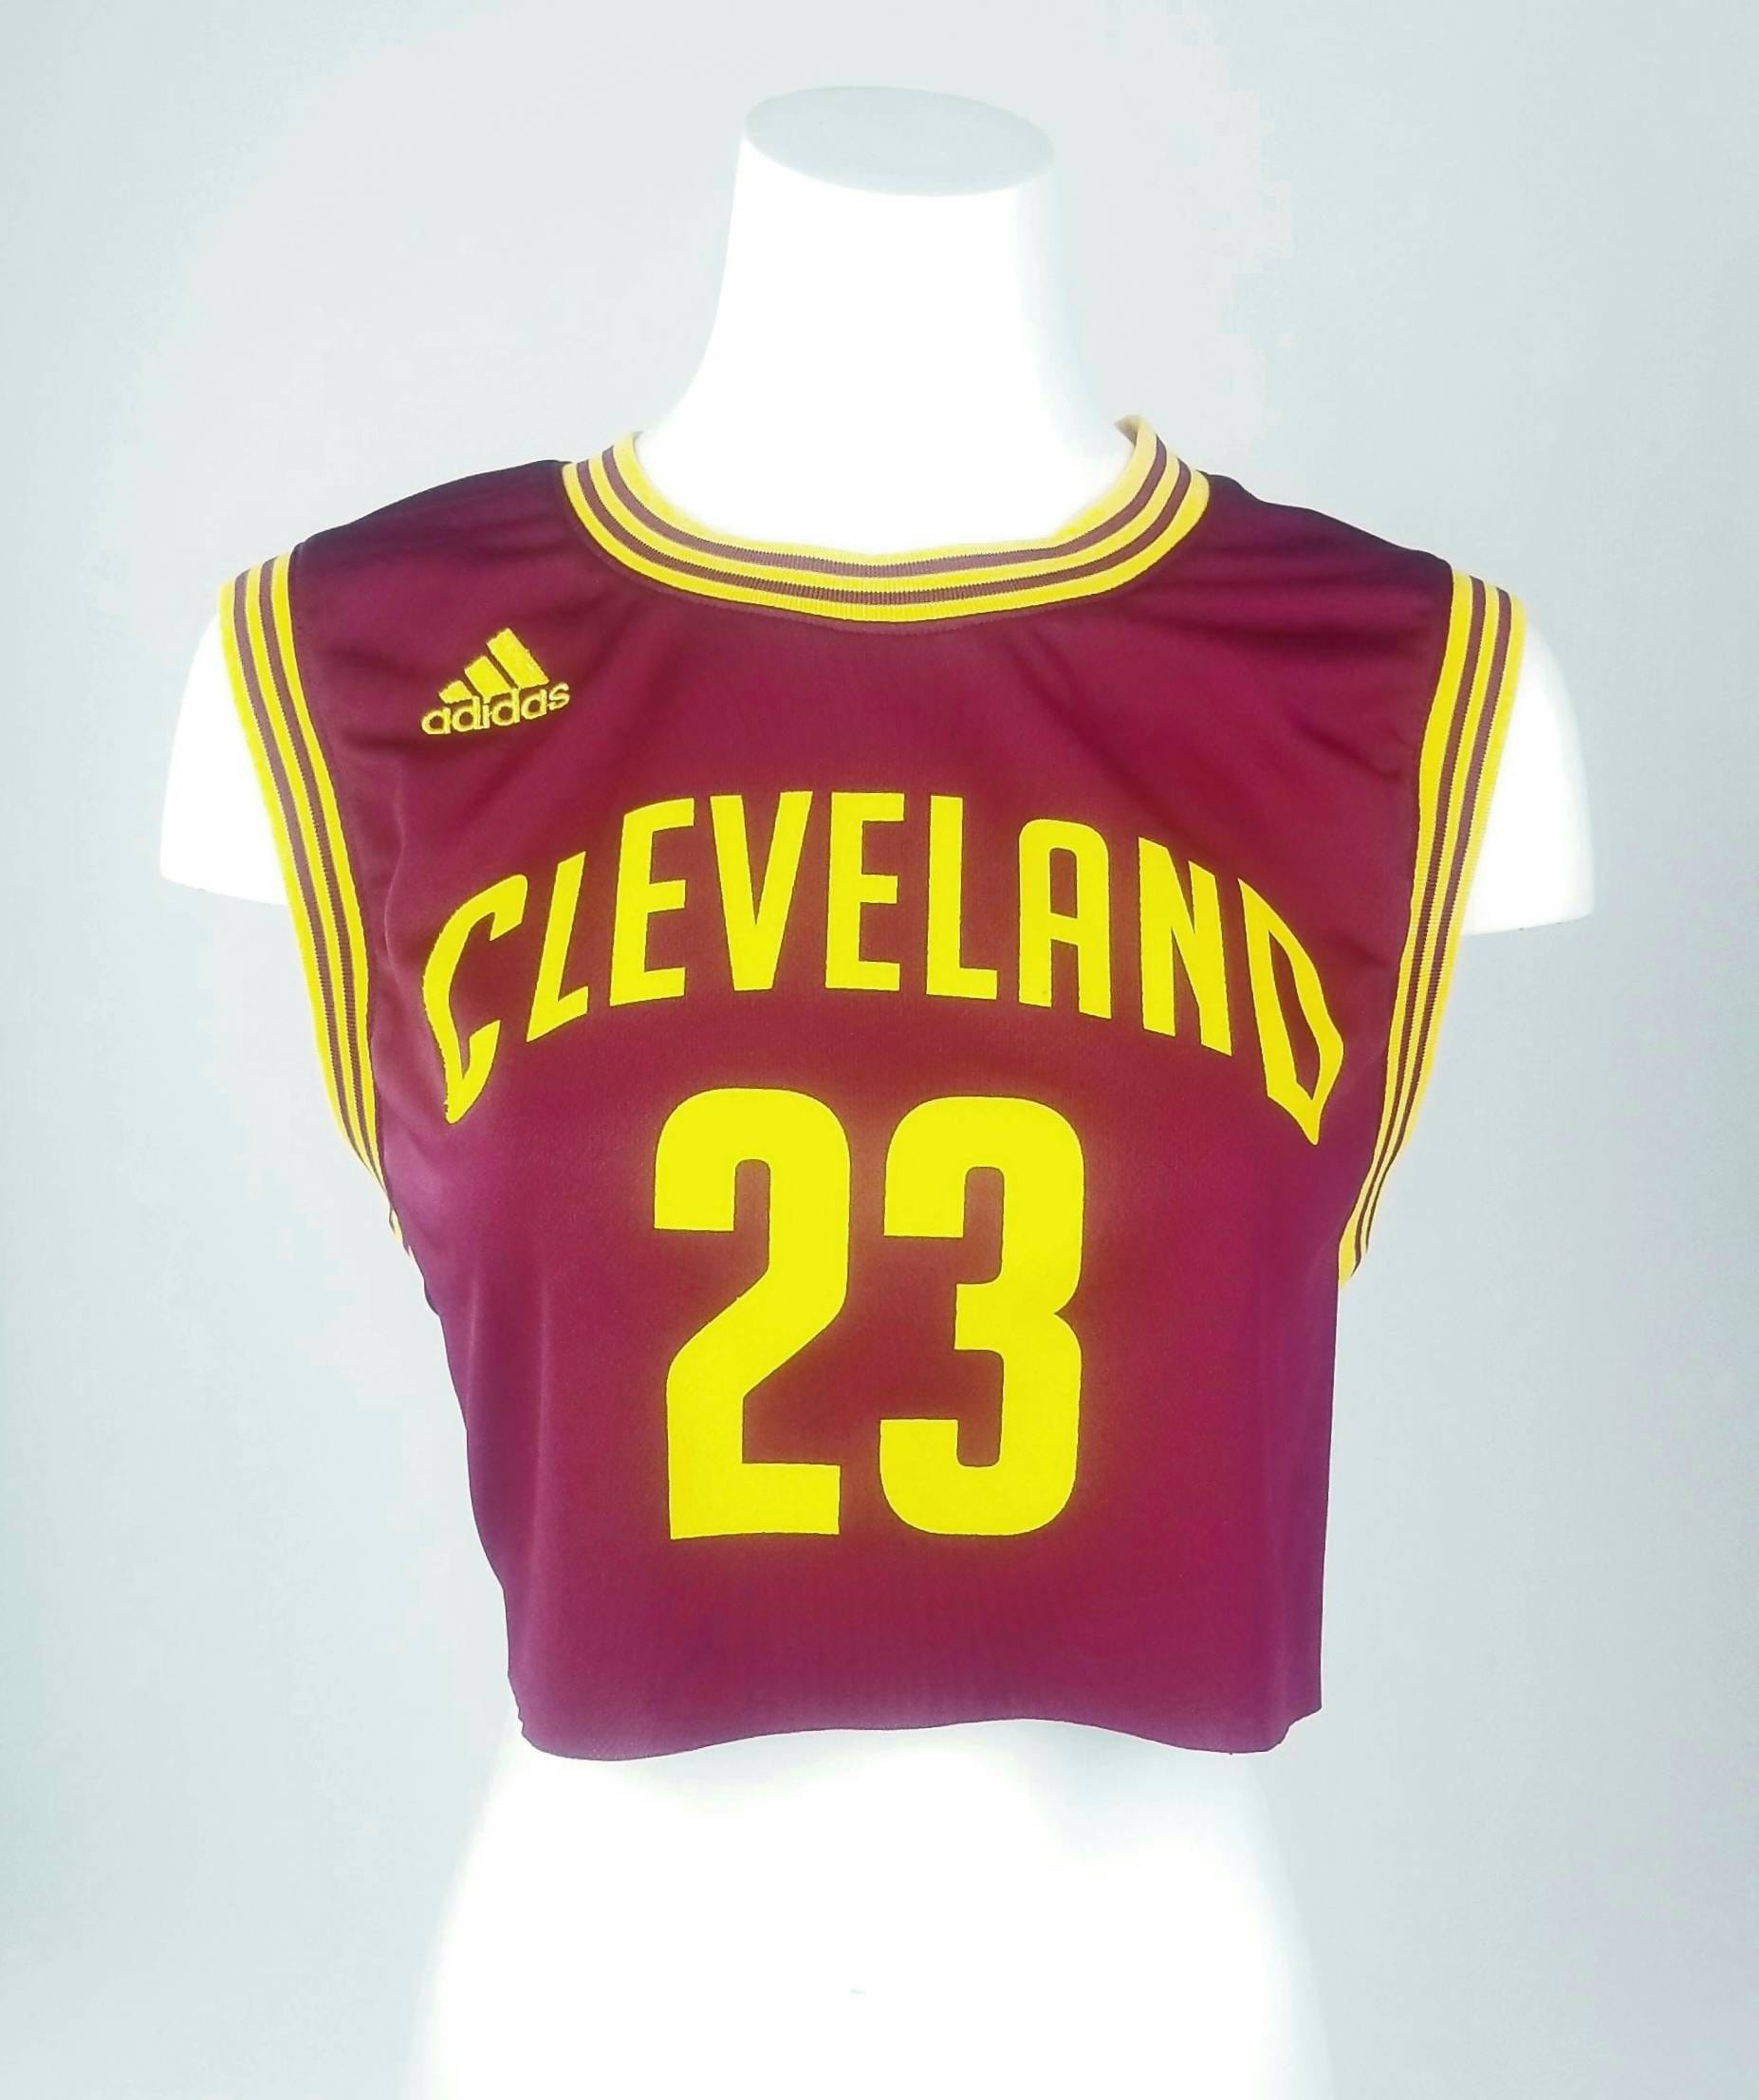  Cleveland Cavaliers NBA Team Panel (Medium, Black/Maroon) :  Sports Related Merchandise : Sports & Outdoors